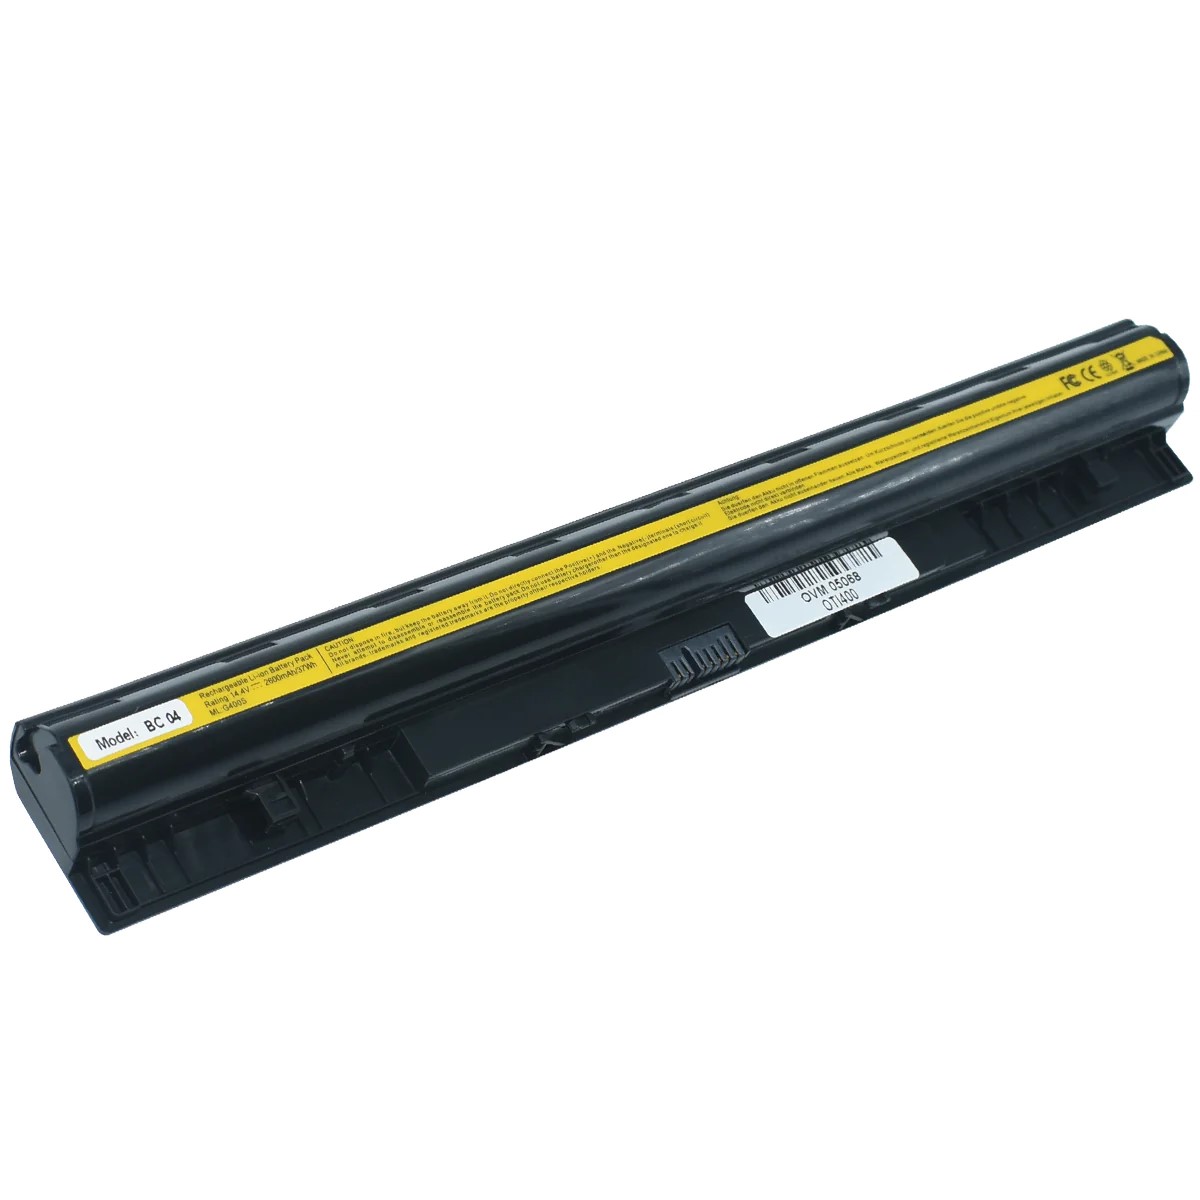 Bateria para Laptop OVALTECH OTI400 Li-ion 14.4V para LENOVO G400s Series -